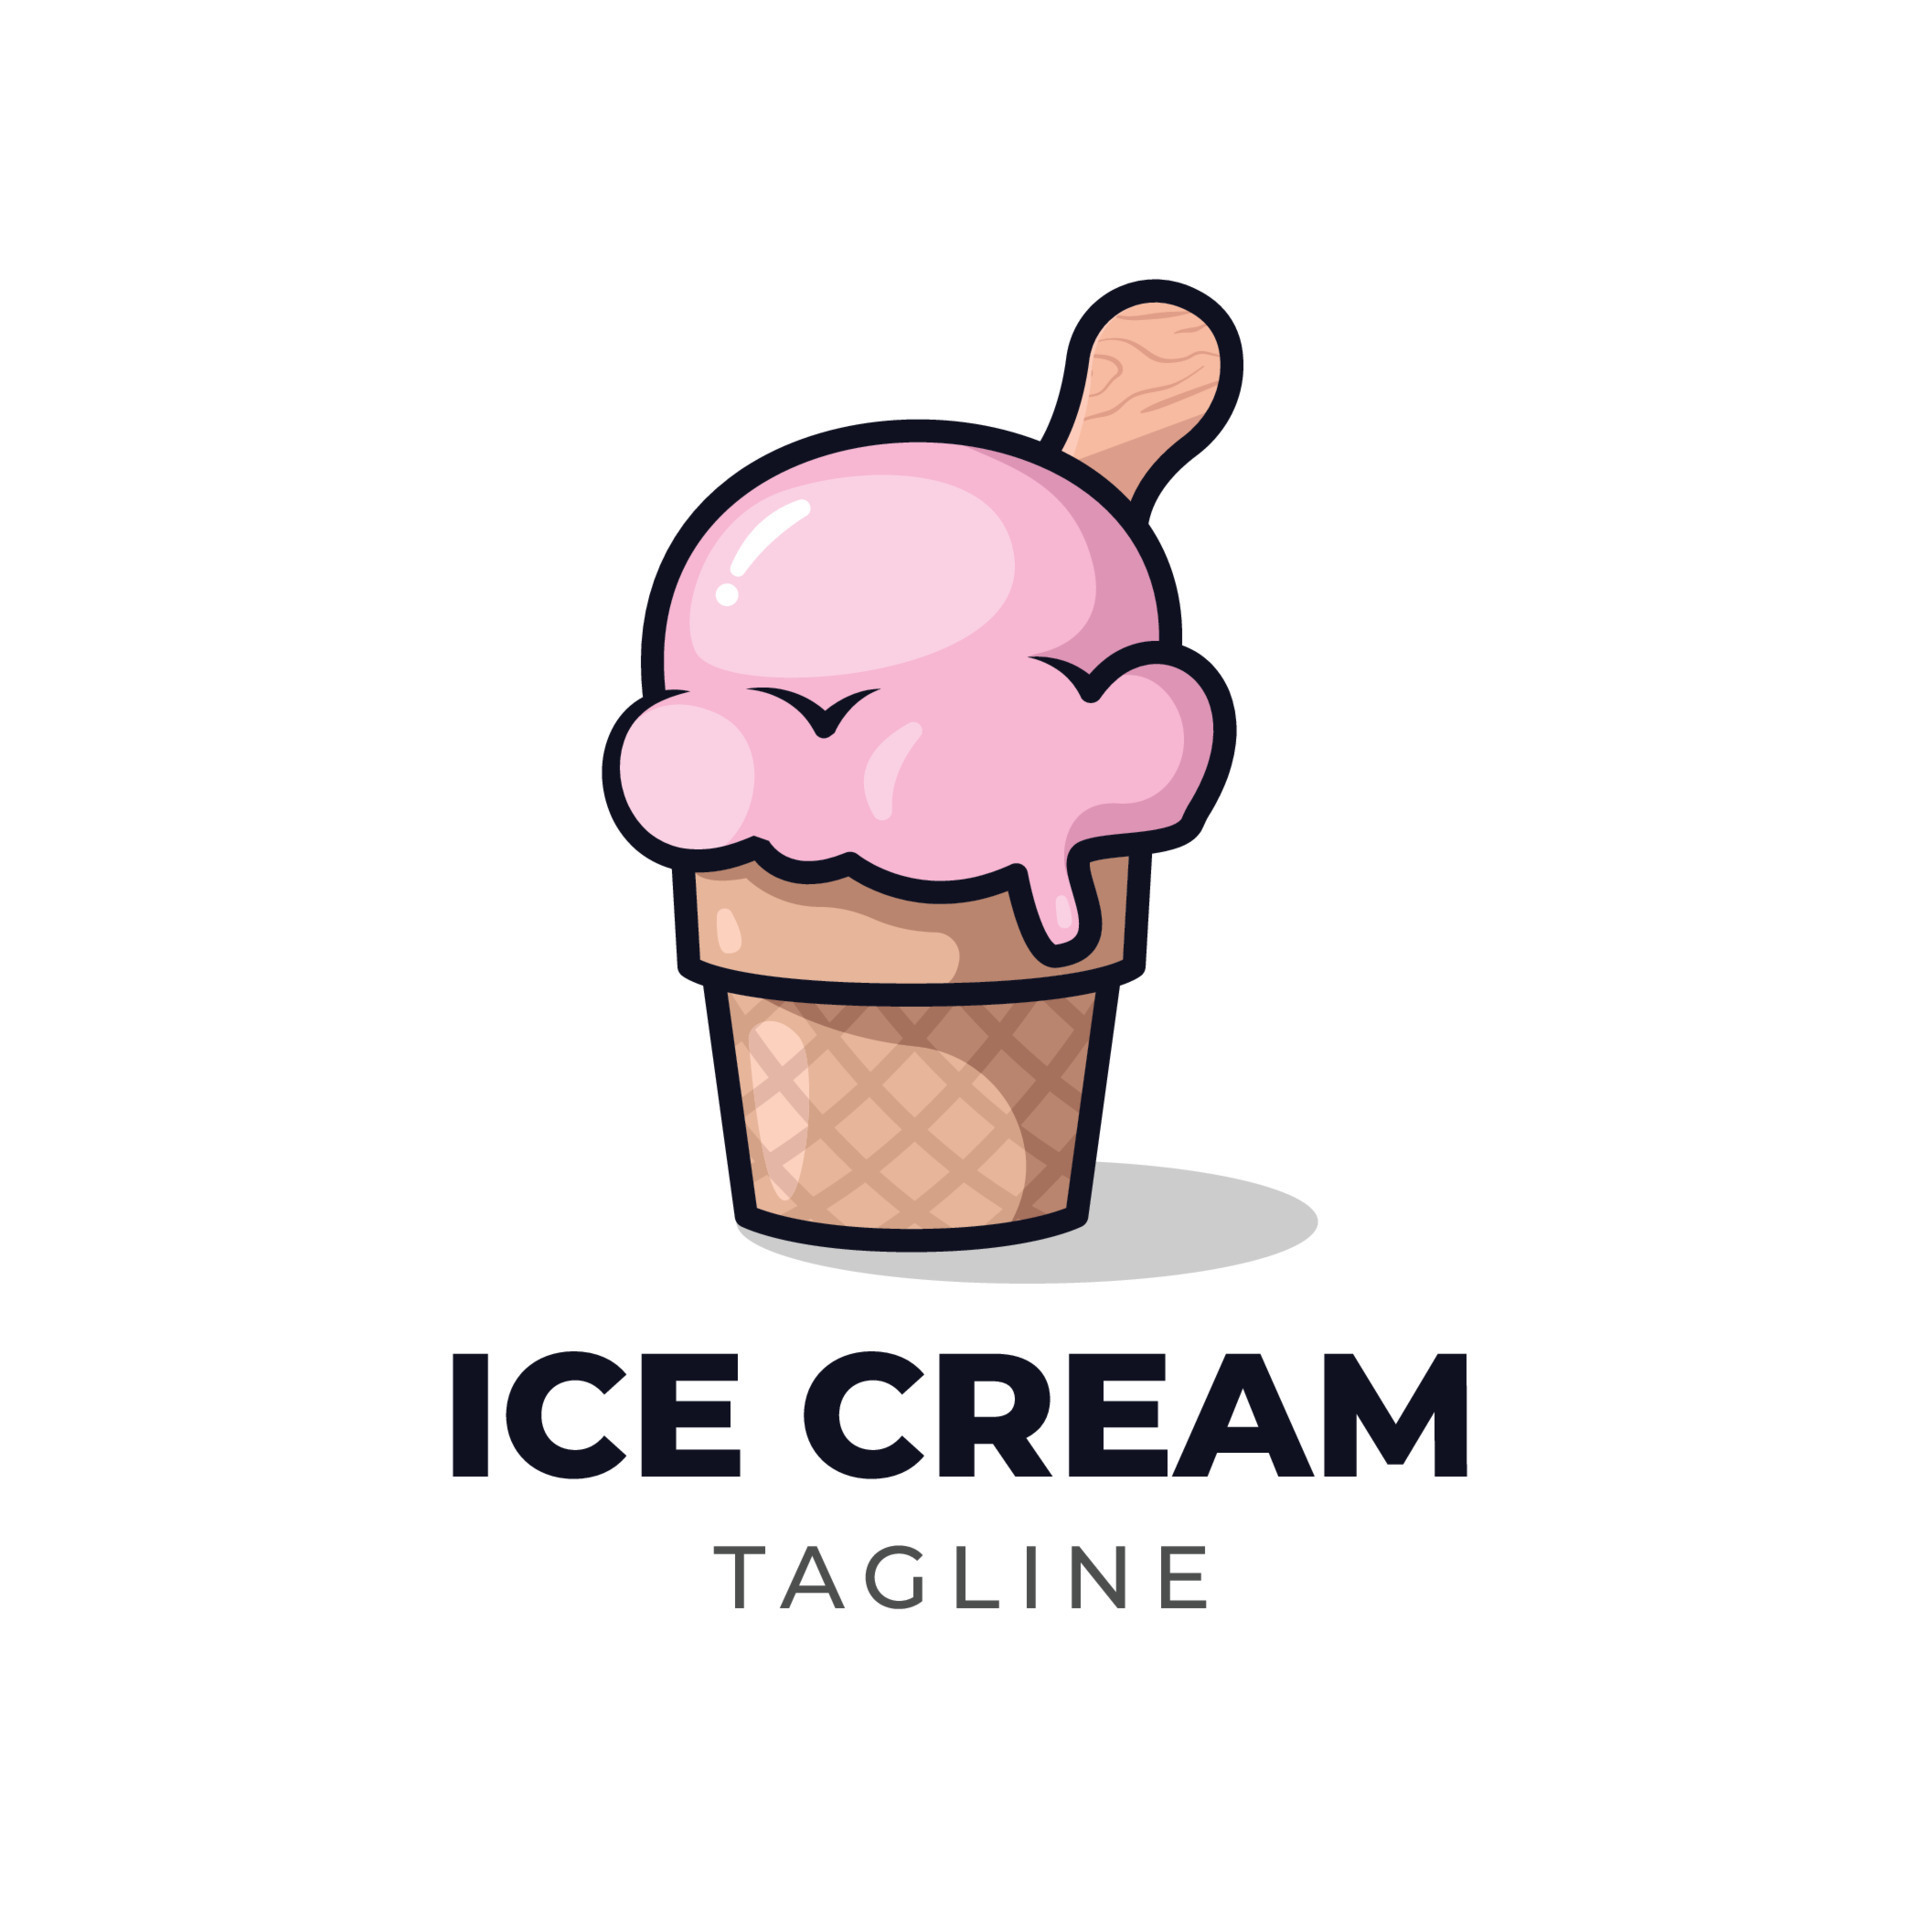 Ice cream Logo Design by Munna Ahmed on Dribbble